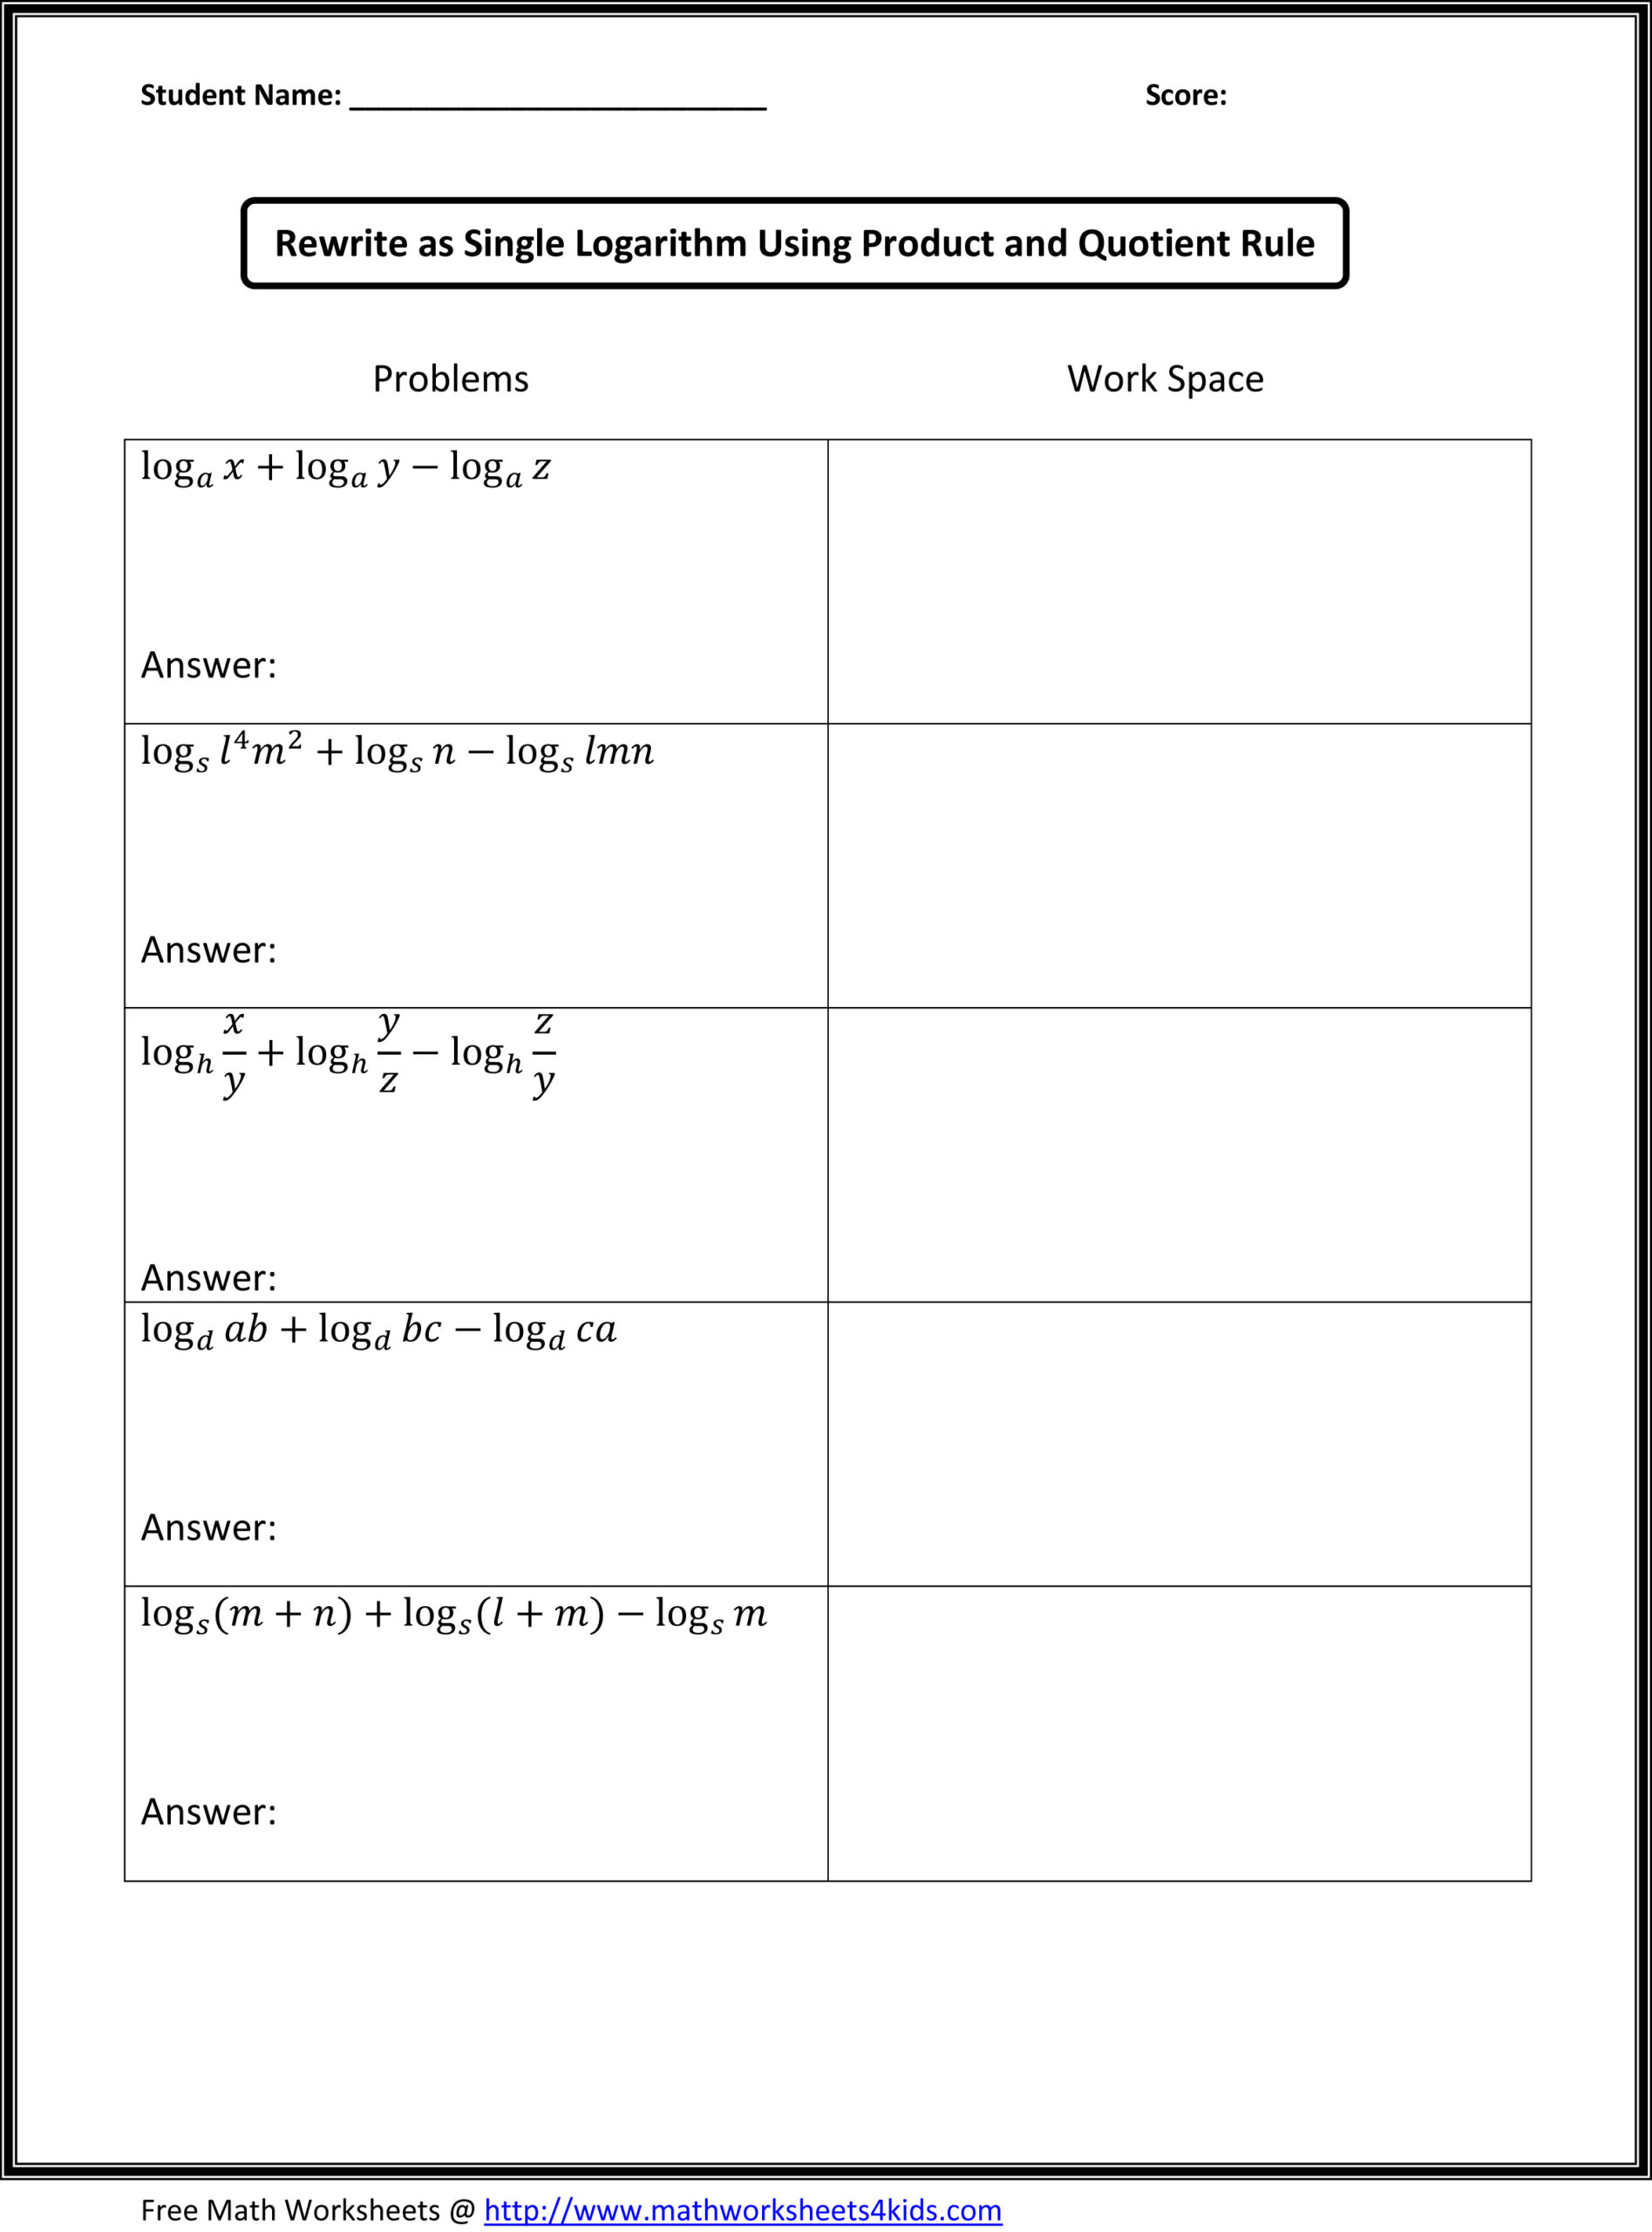 printable-math-worksheets-www-mathworksheets4kids-com-printable